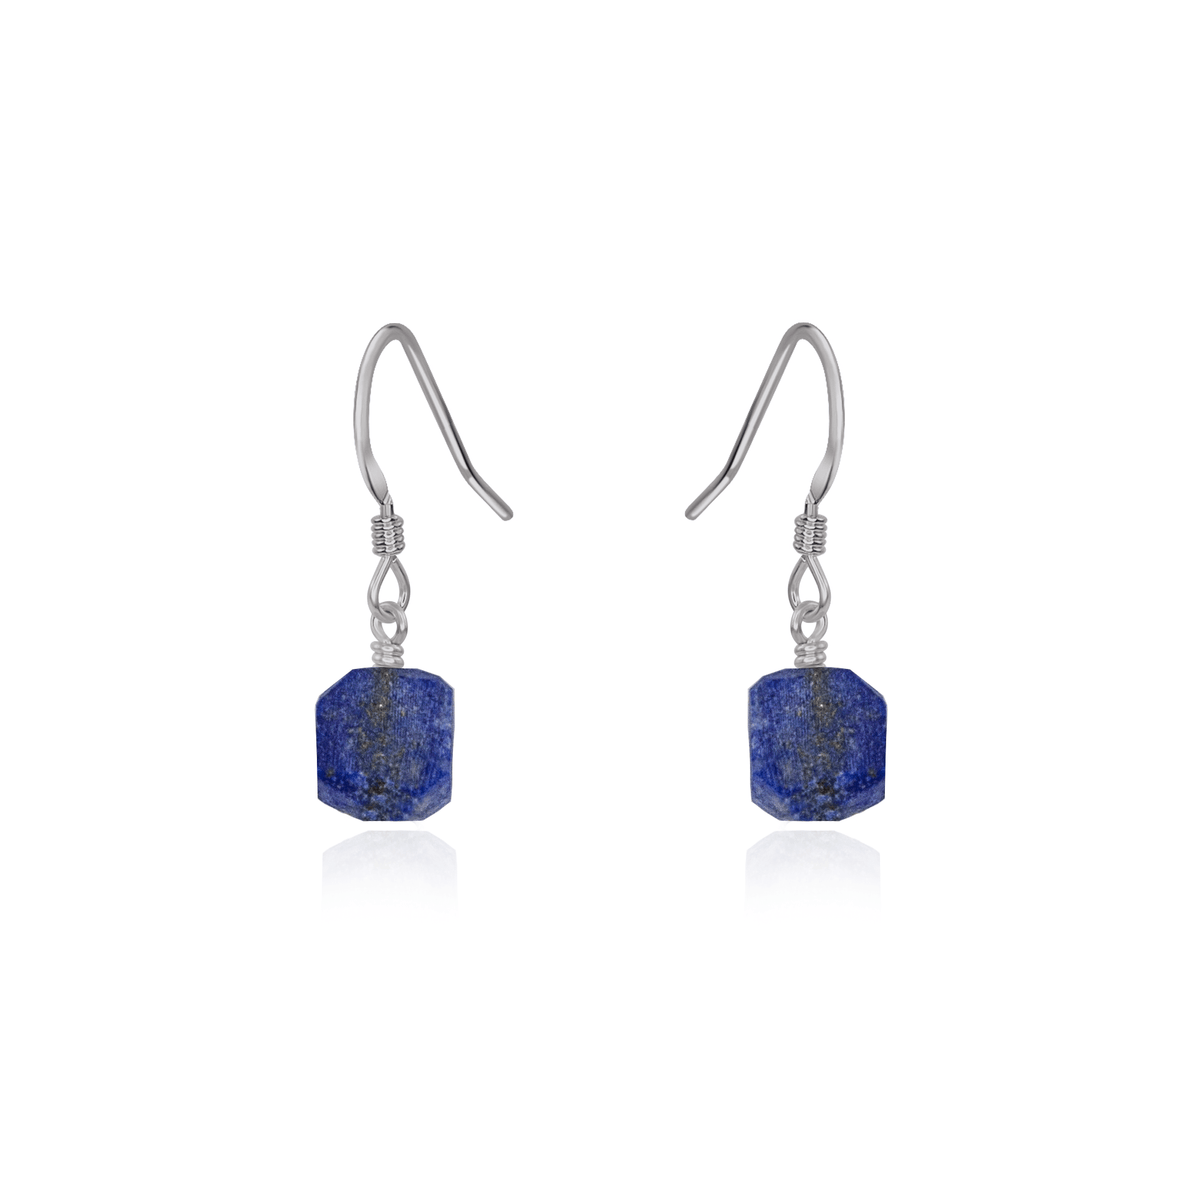 Raw Blue Lapis Lazuli Crystal Dangle Drop Earrings - Raw Blue Lapis Lazuli Crystal Dangle Drop Earrings - Stainless Steel - Luna Tide Handmade Crystal Jewellery